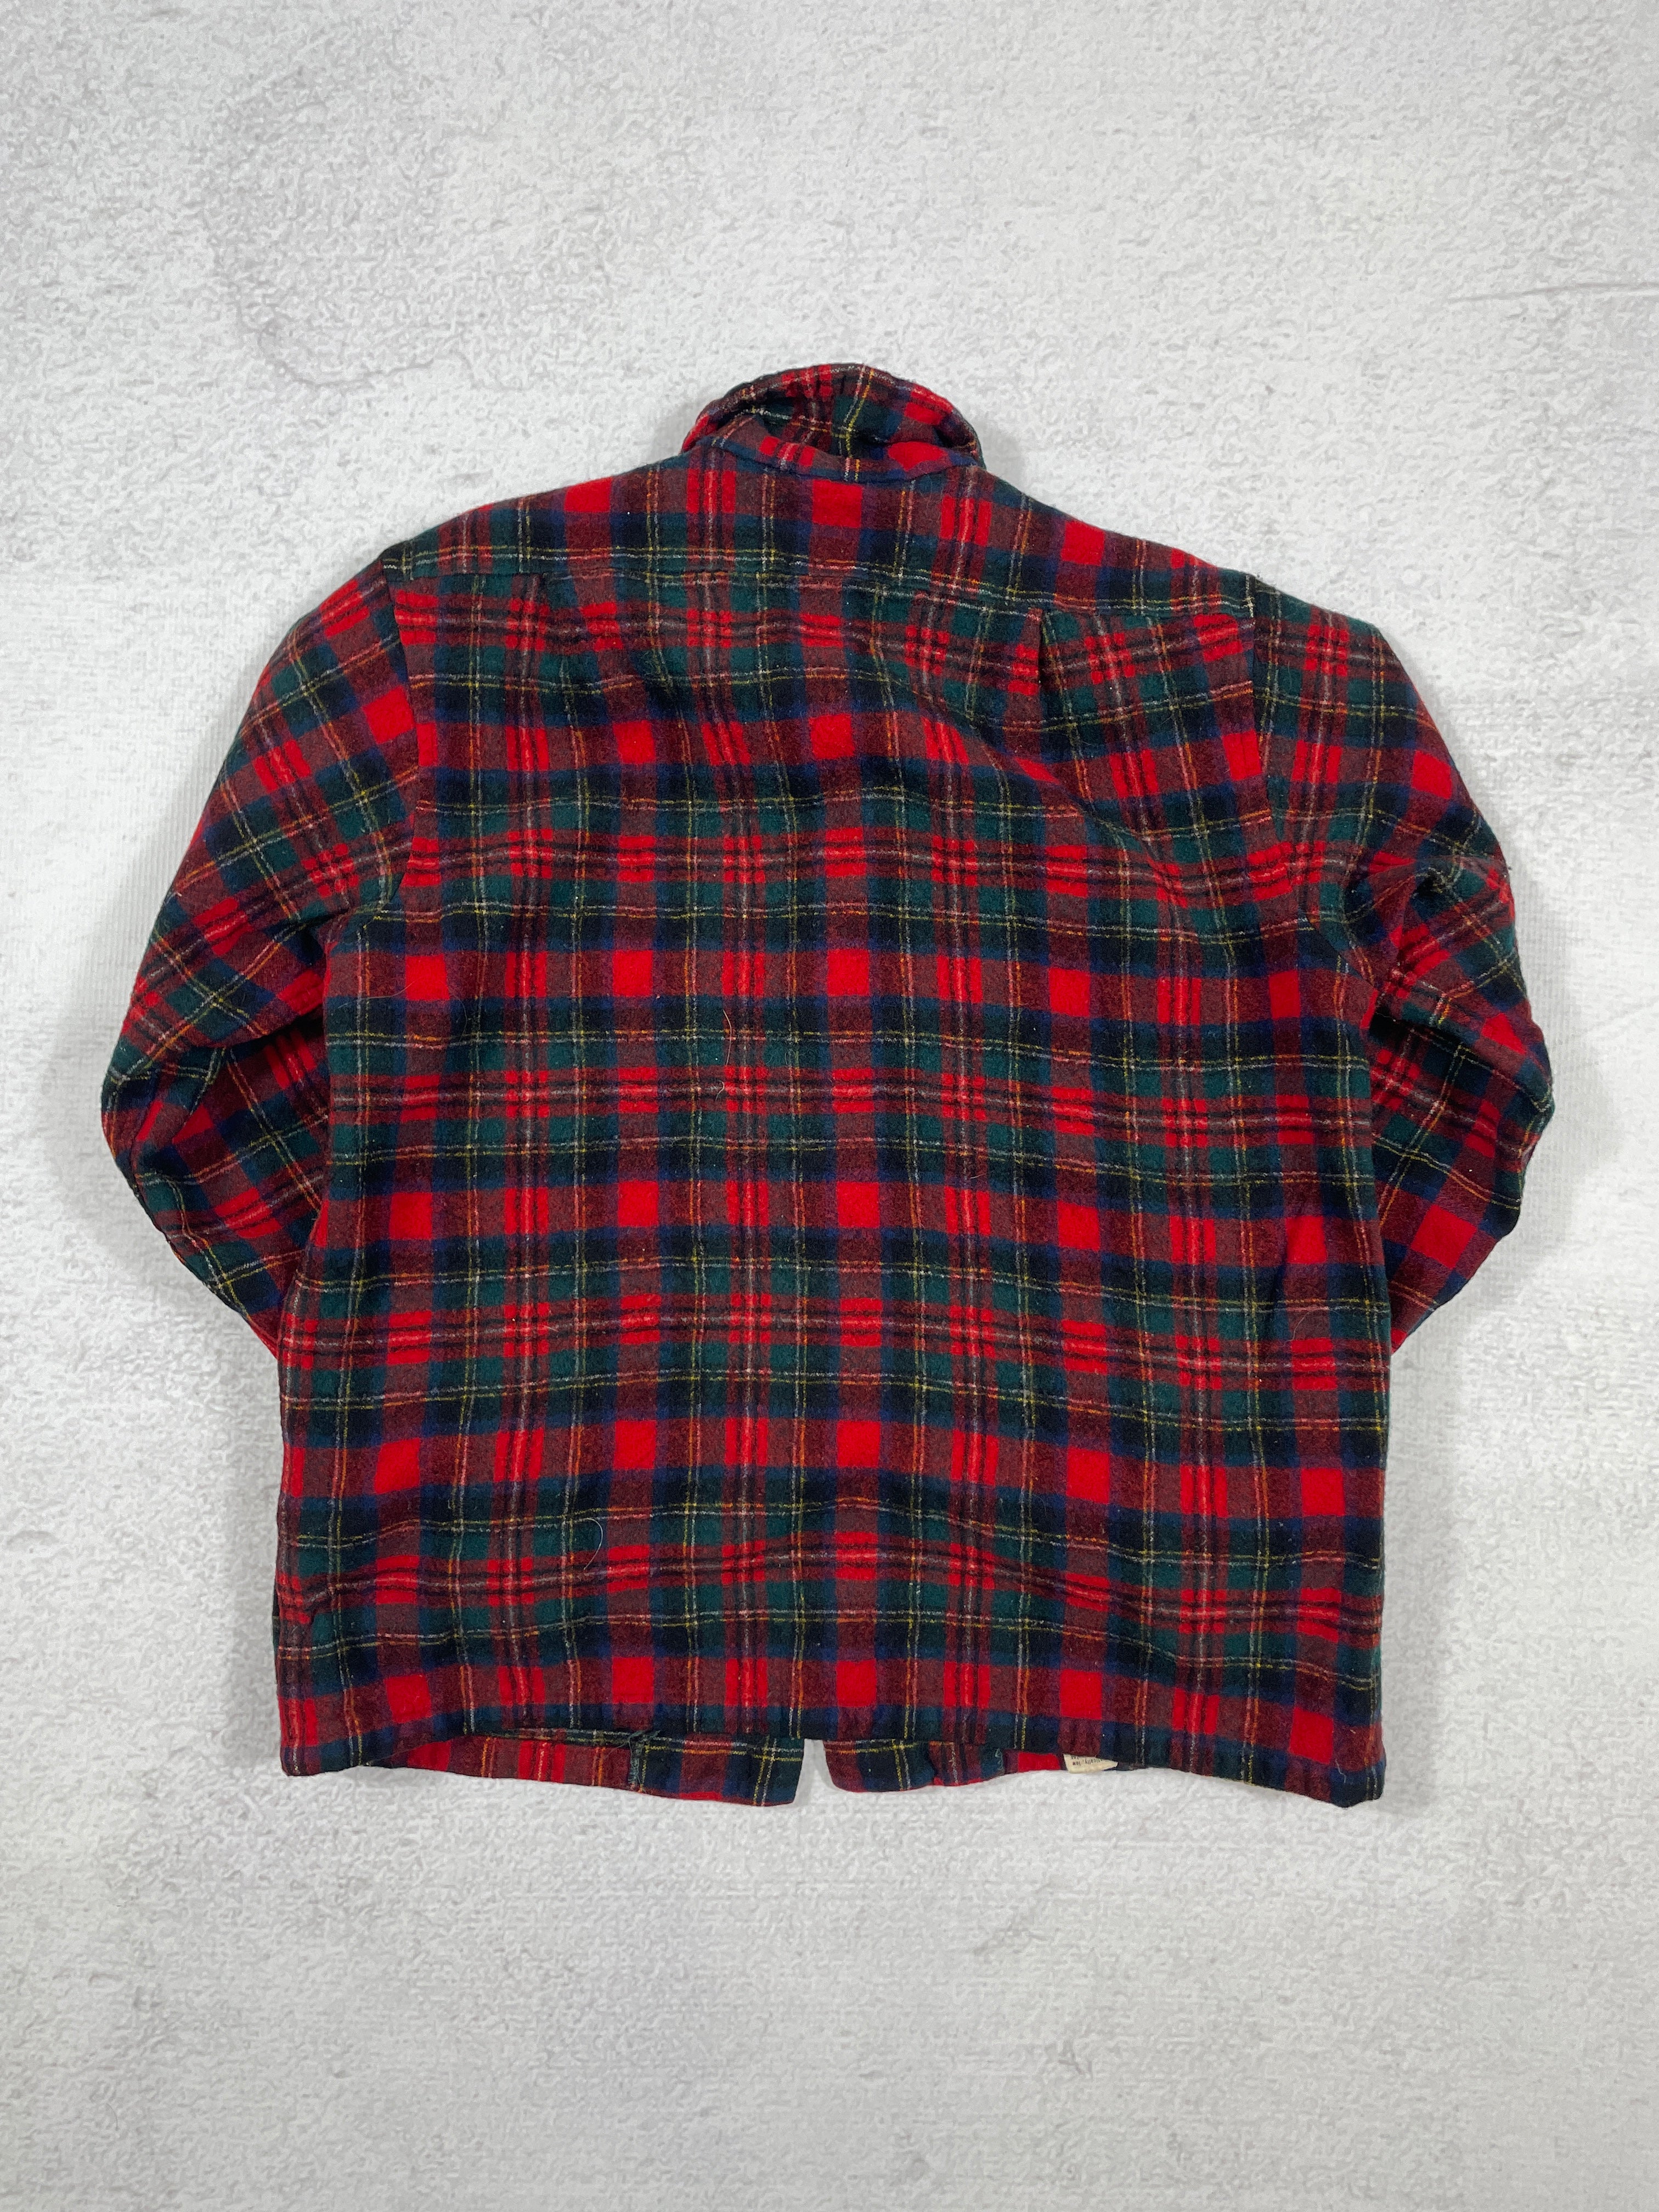 Vintage Pendleton Flannel Buttoned Shirt - Men's Small